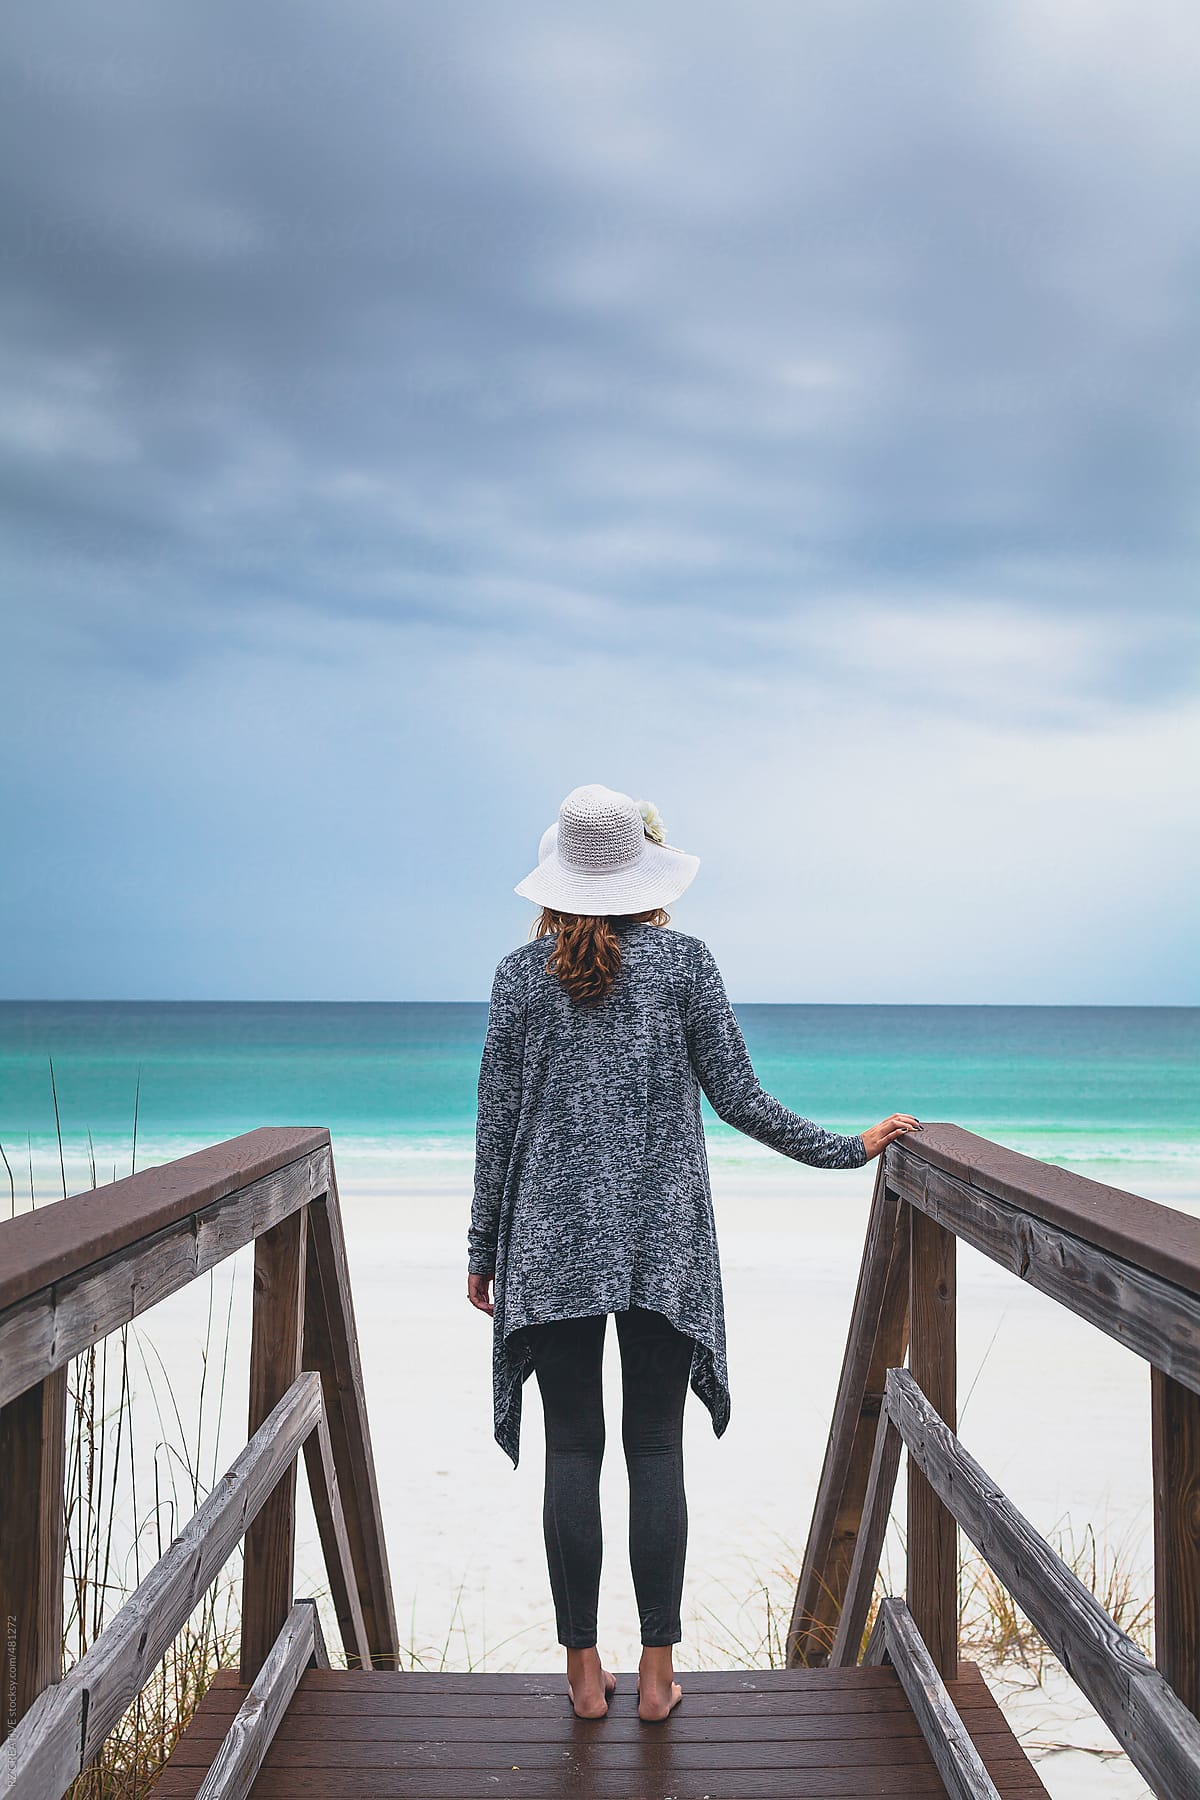 Woman on boardwalk at stormy beach.